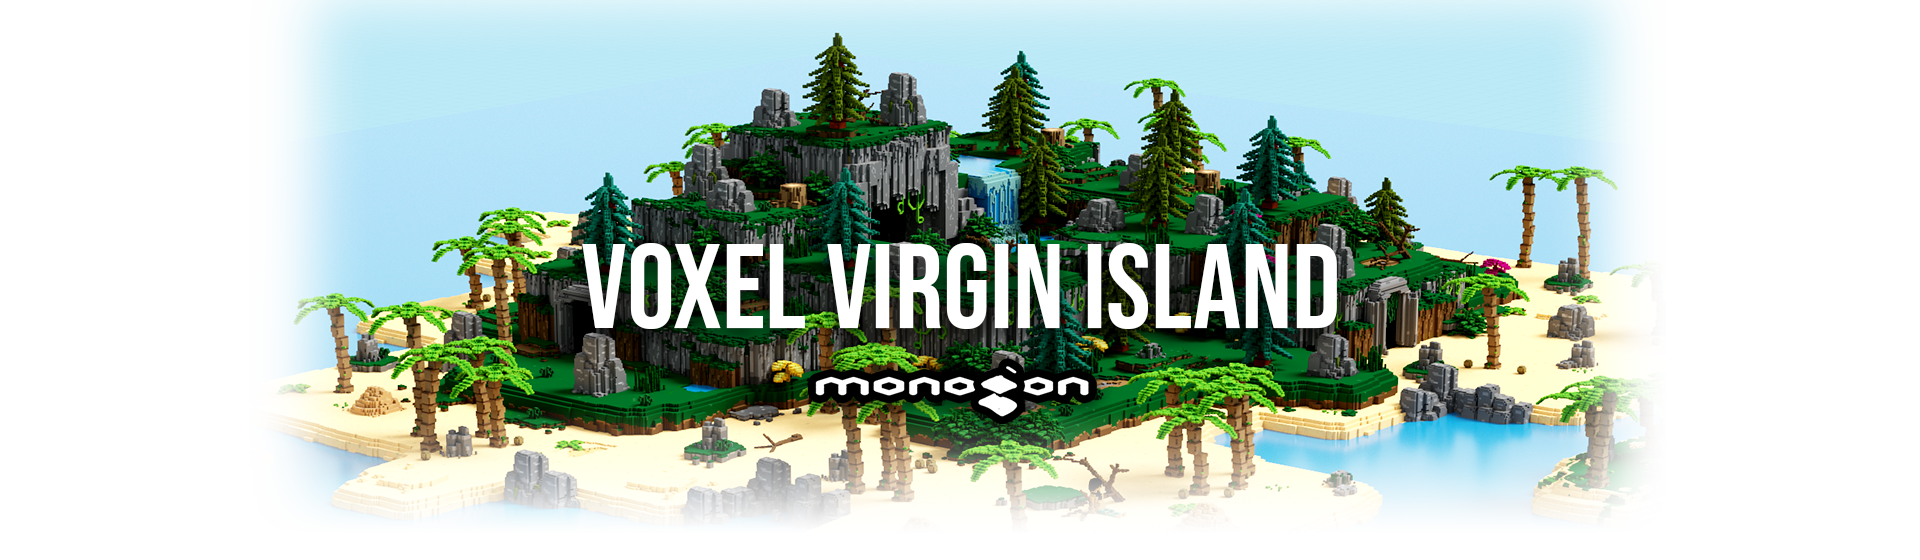 Voxel Virgin Island - monogon